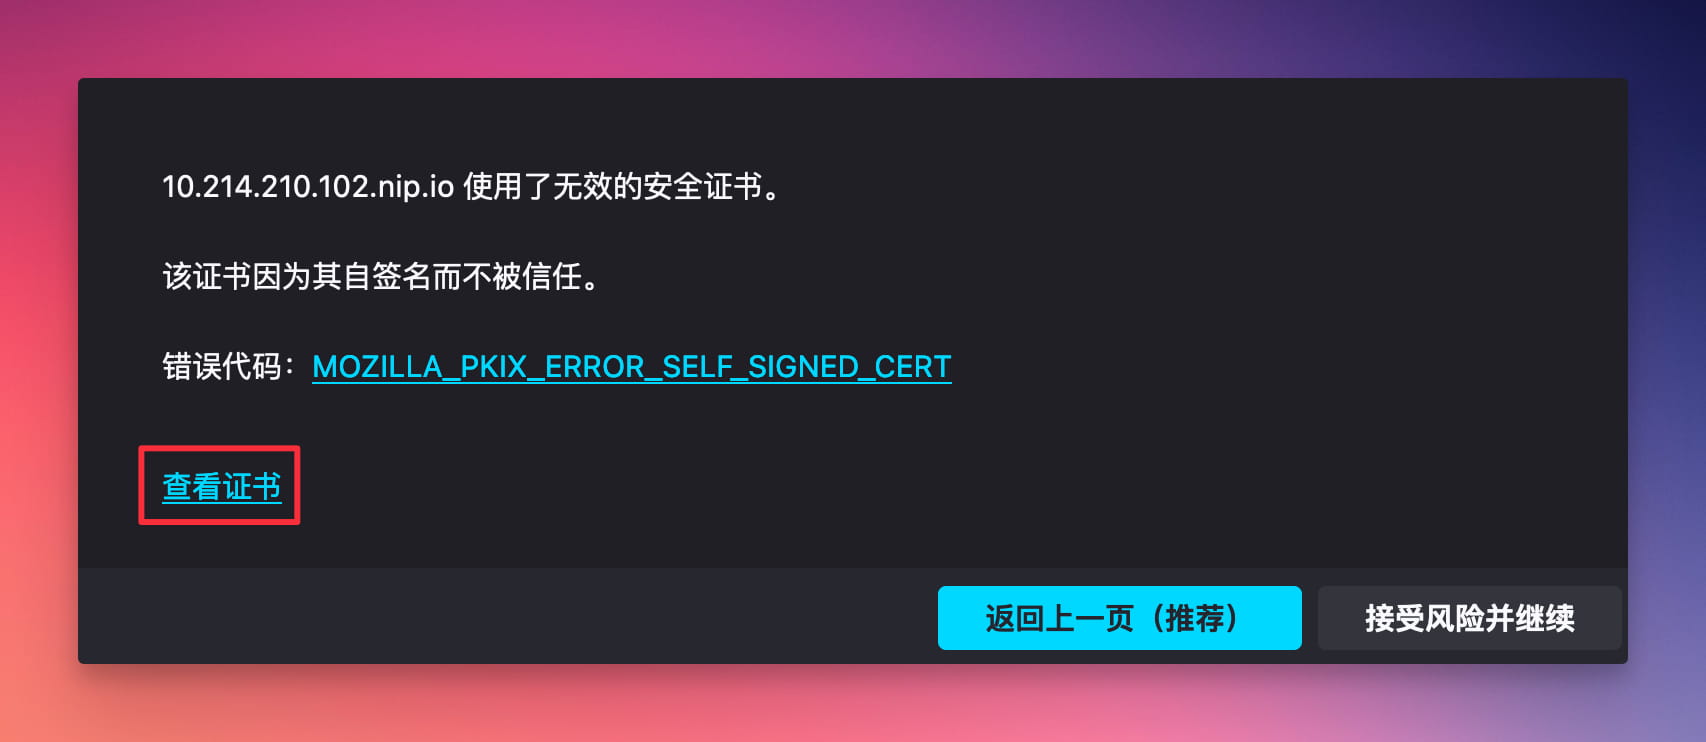 Firefox Certificate Export Step 2